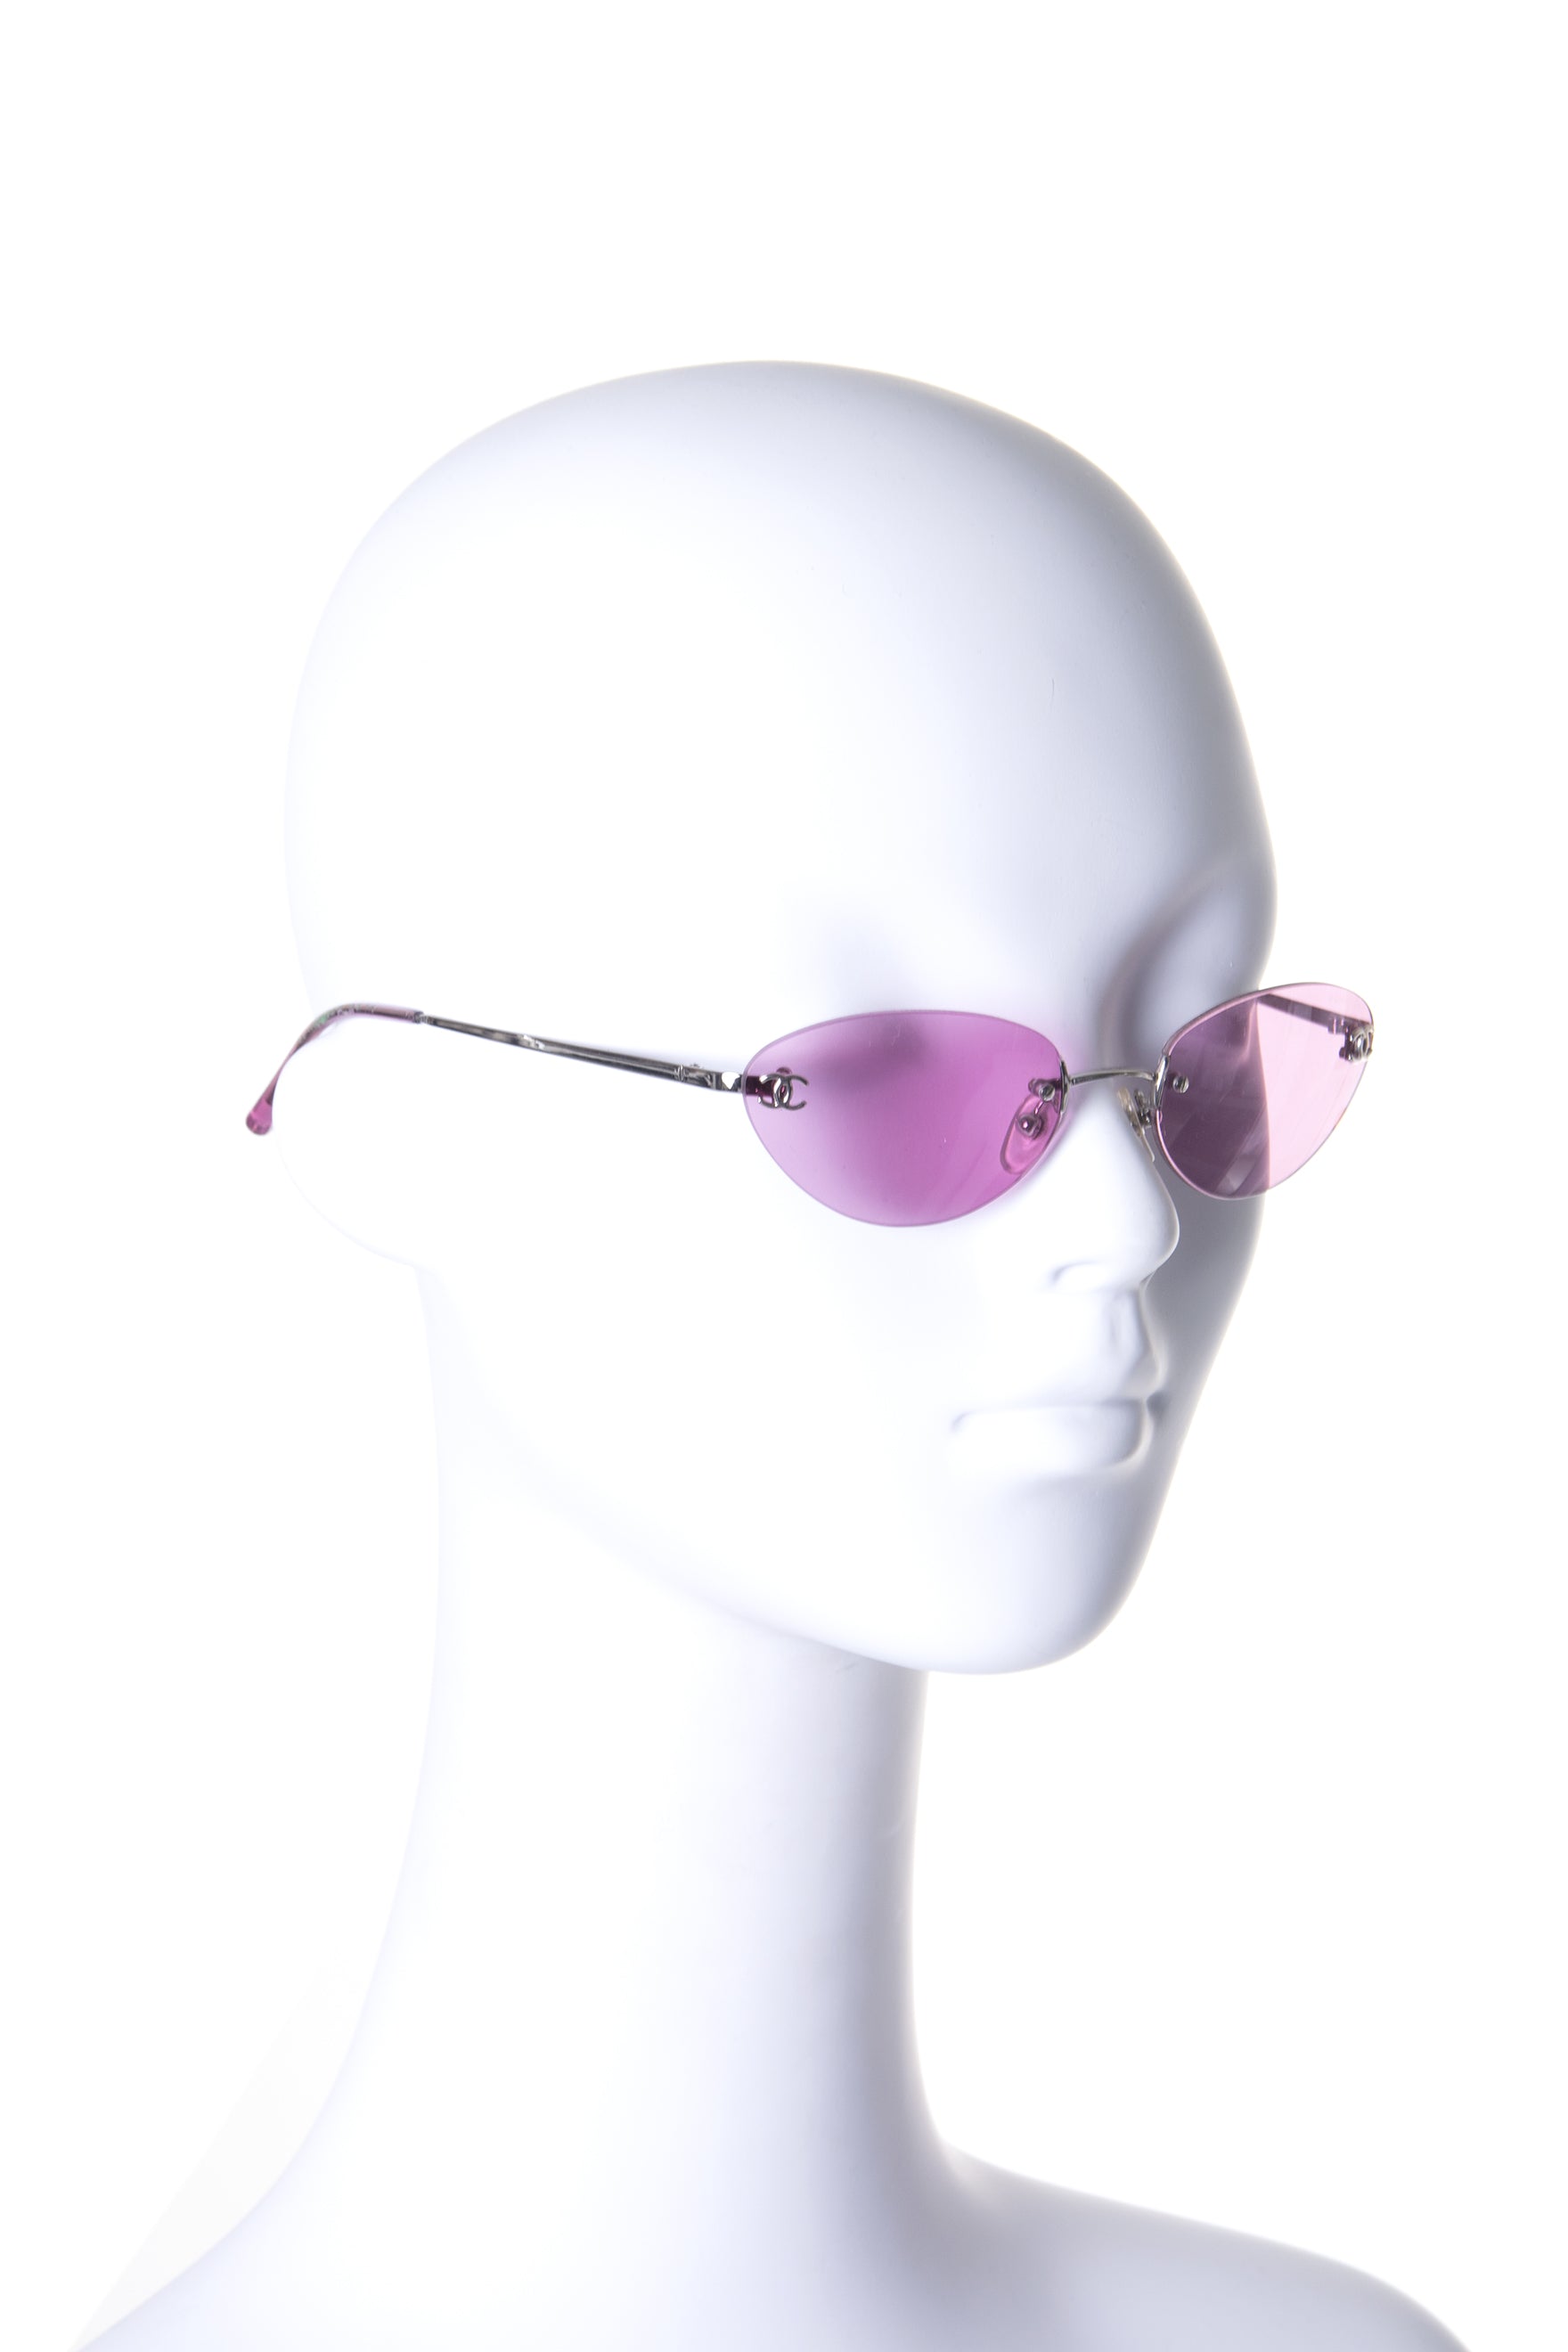 Pre-owned Chanel Sunglasses ($145) via Polyvore